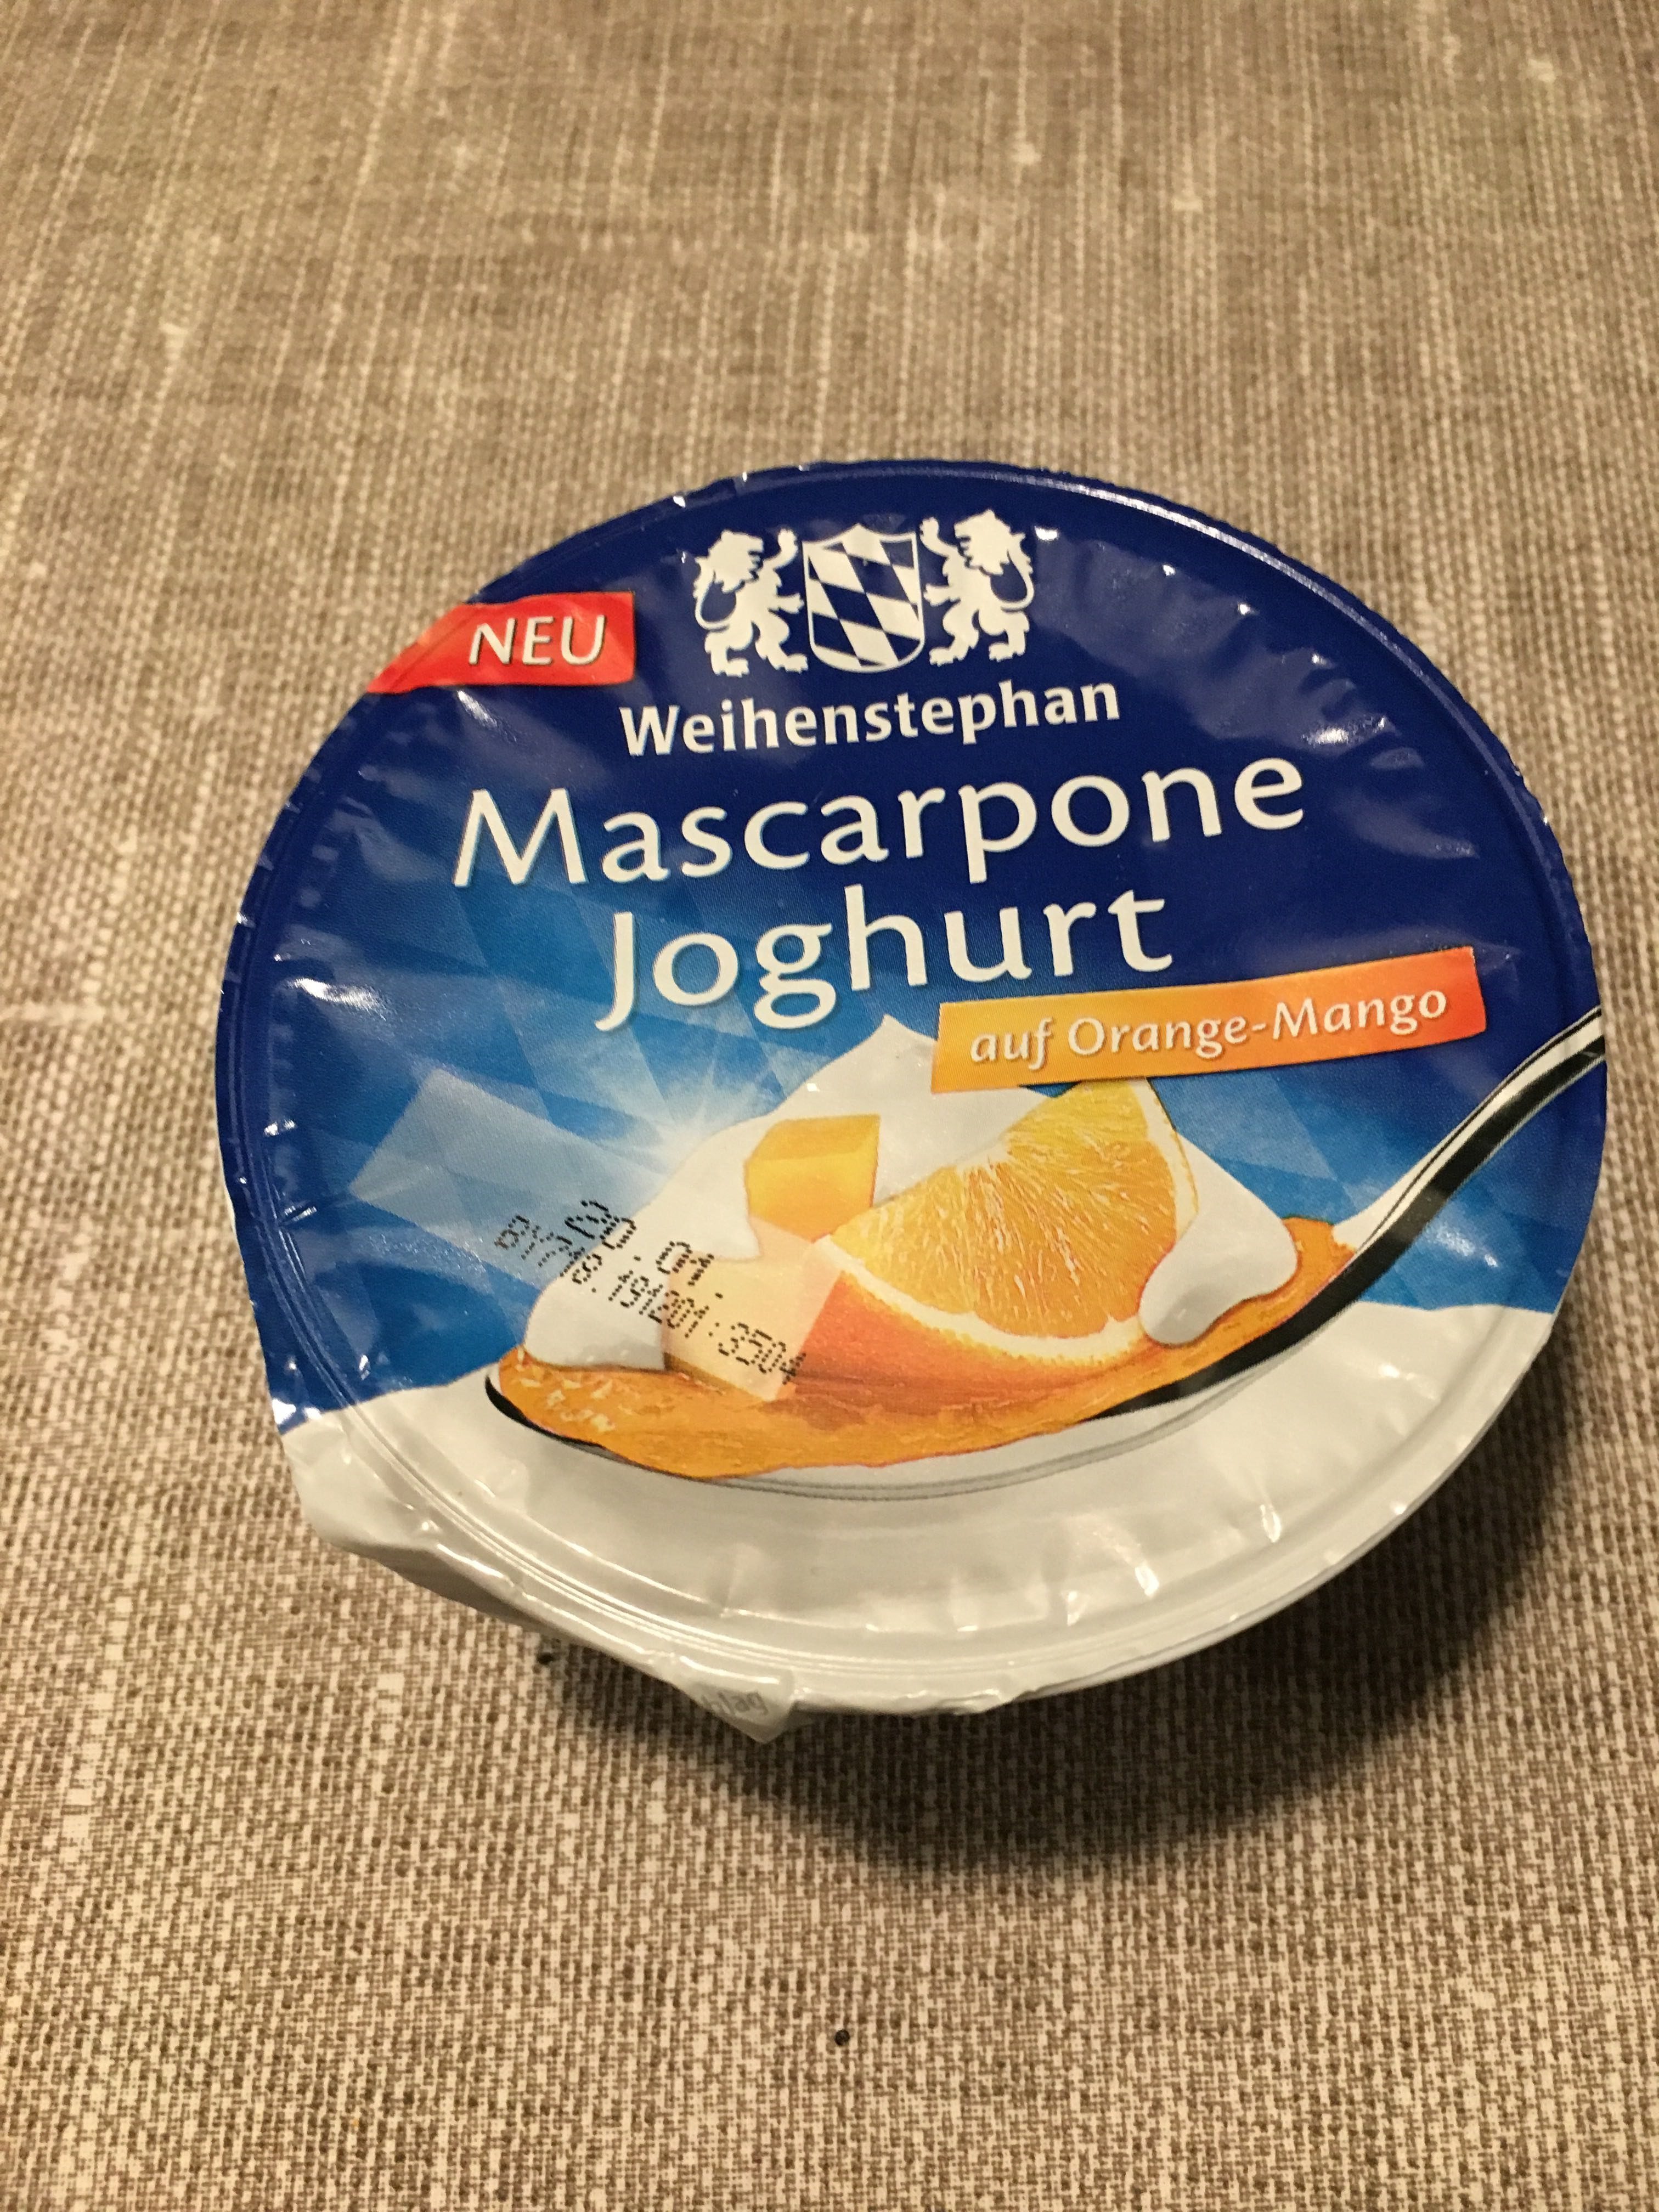 Mascarpone Joghurt - Produkt